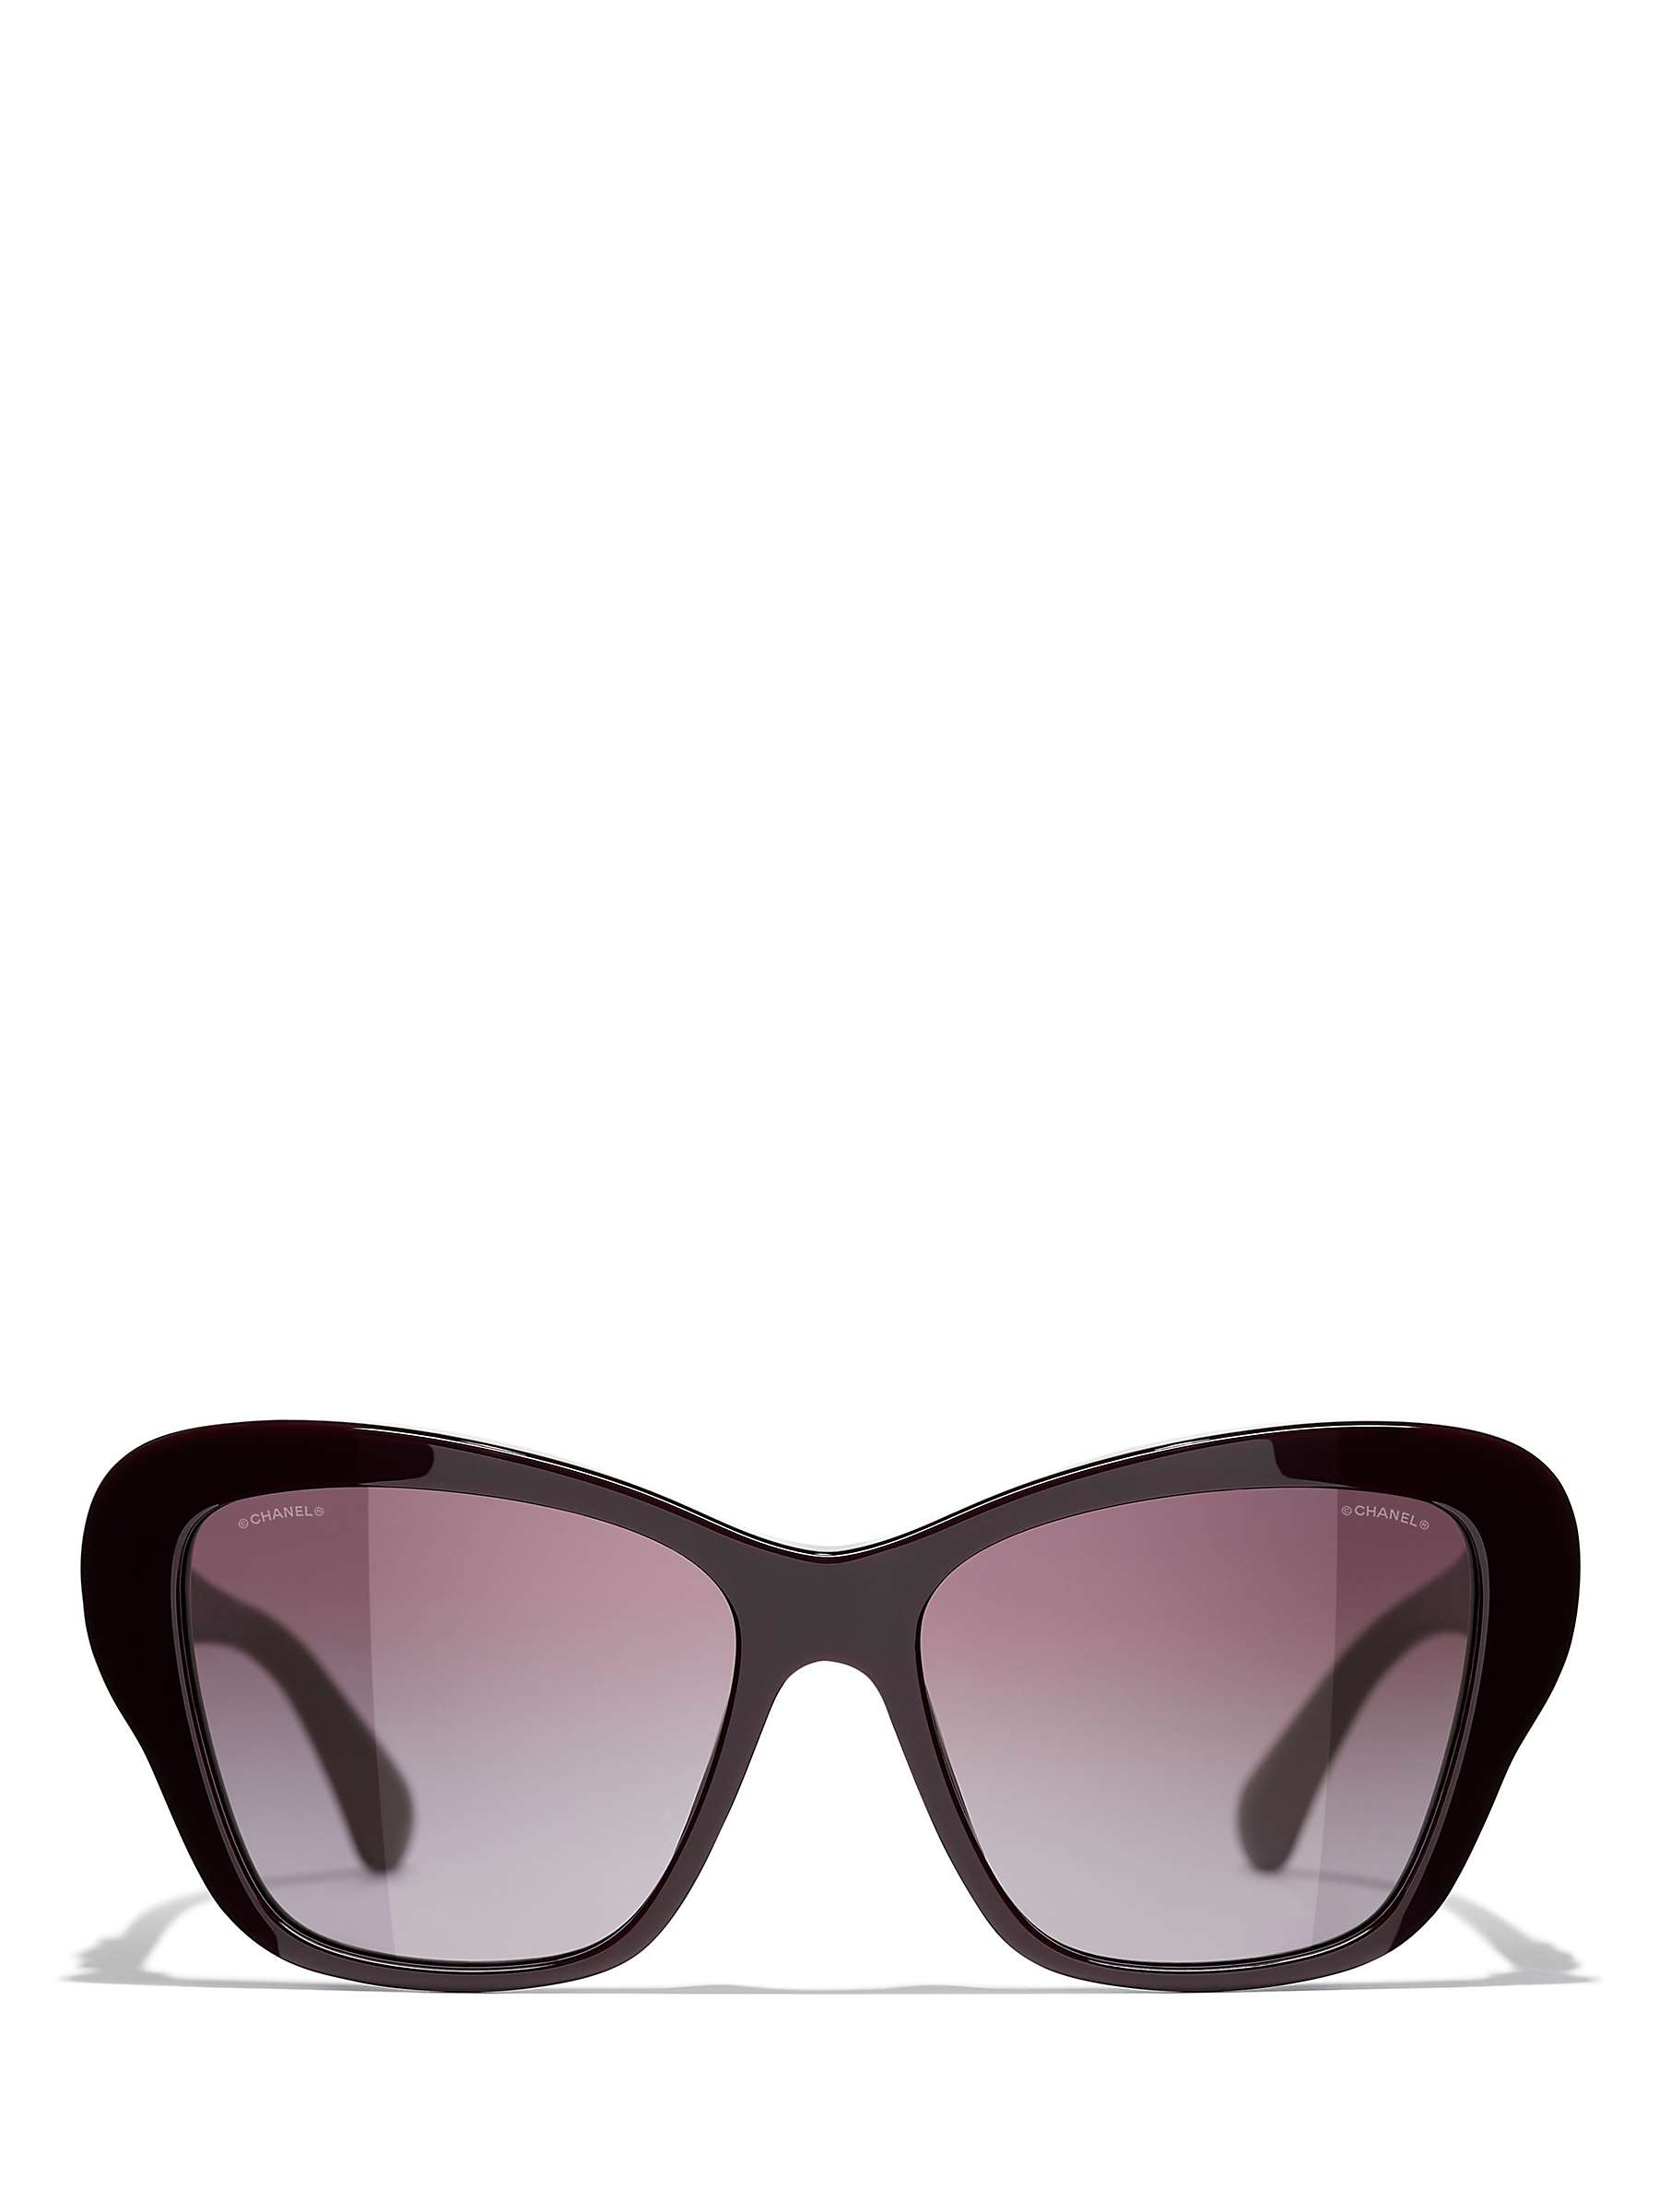 Buy CHANEL CH5458 Women's Butterfly Sunglasses, Bordeaux Online at johnlewis.com